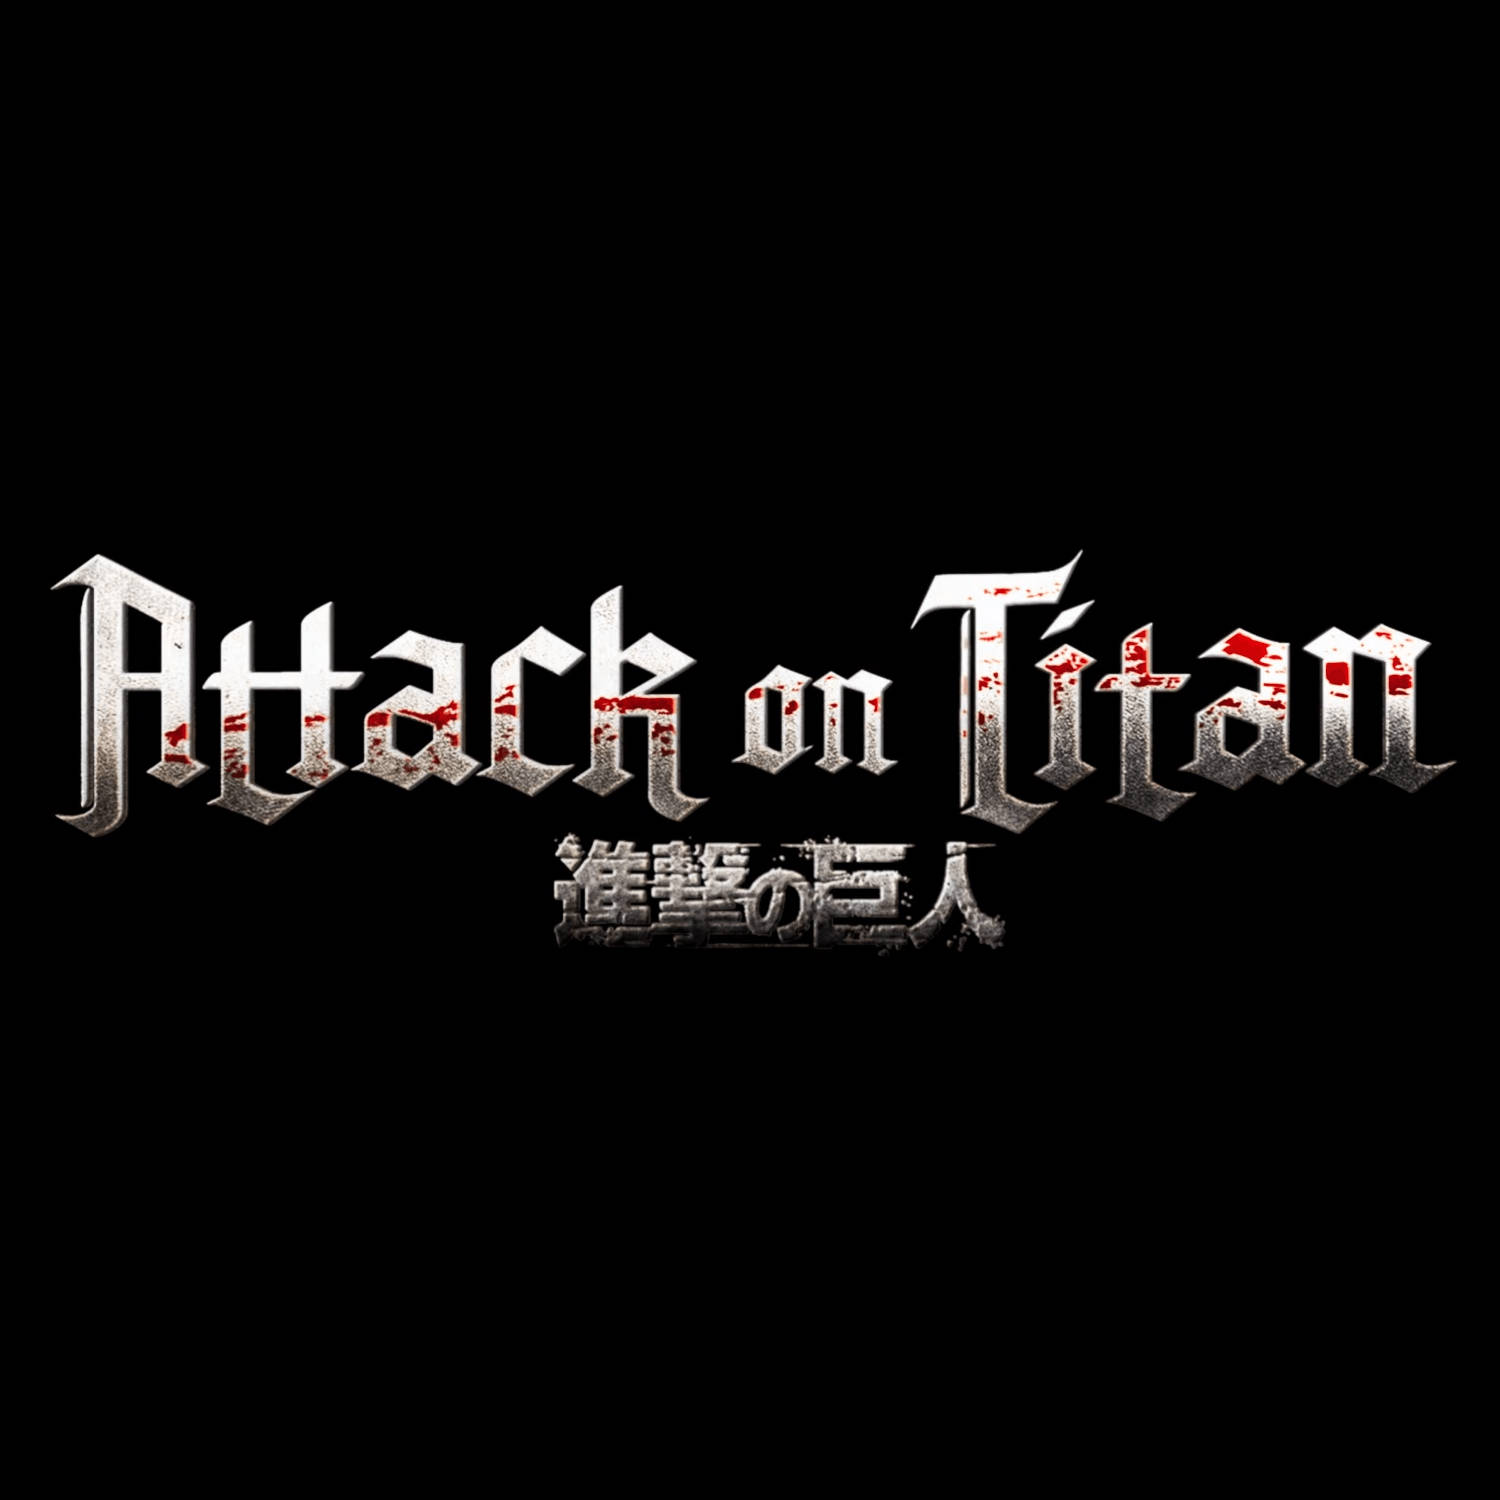 Black Attack On Titan Logo Wallpaper